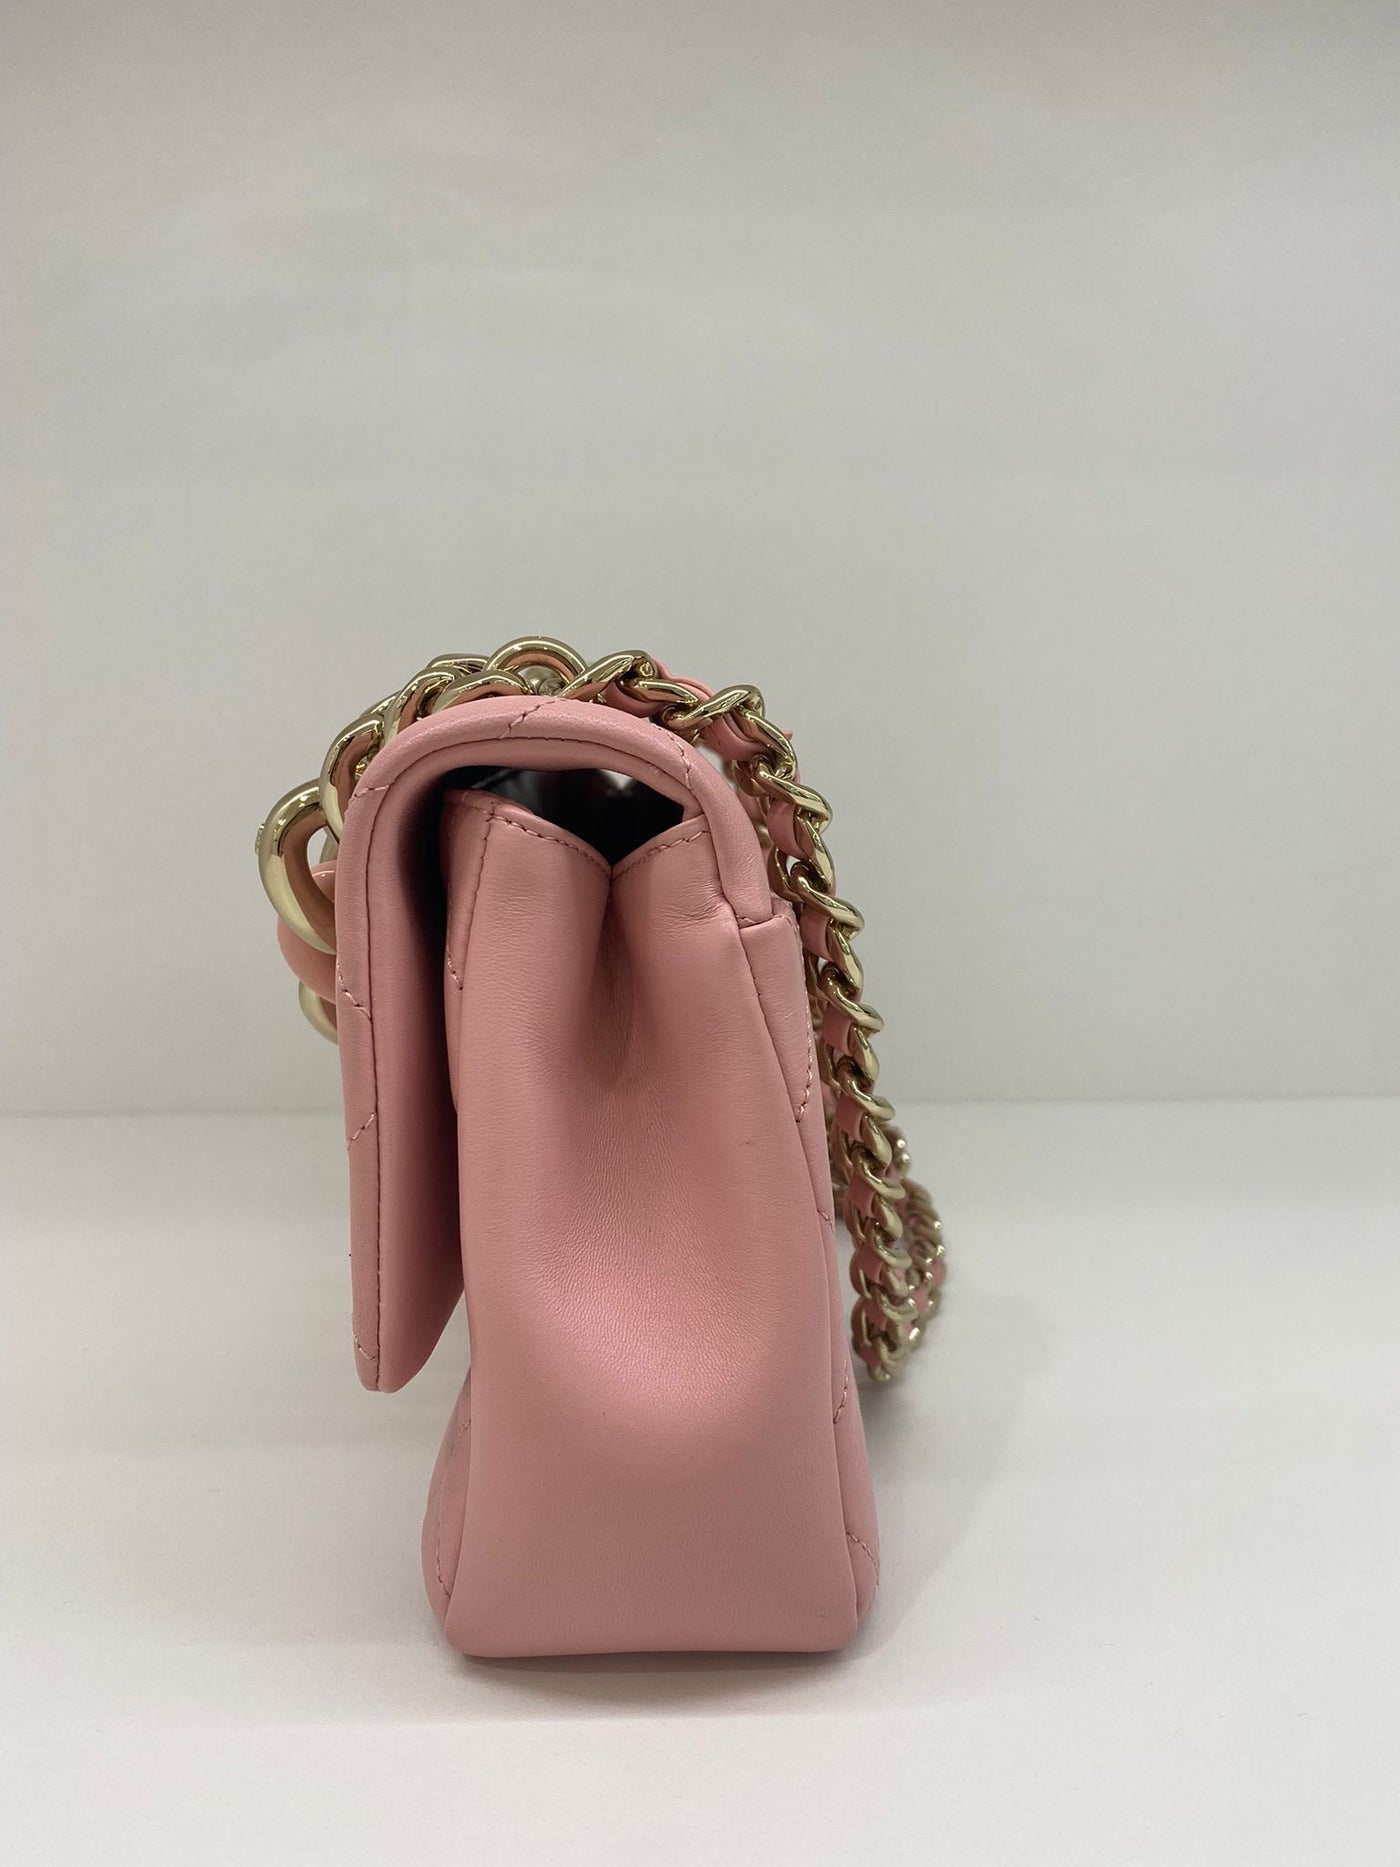 Chanel Light Pink Flap Bag GHW